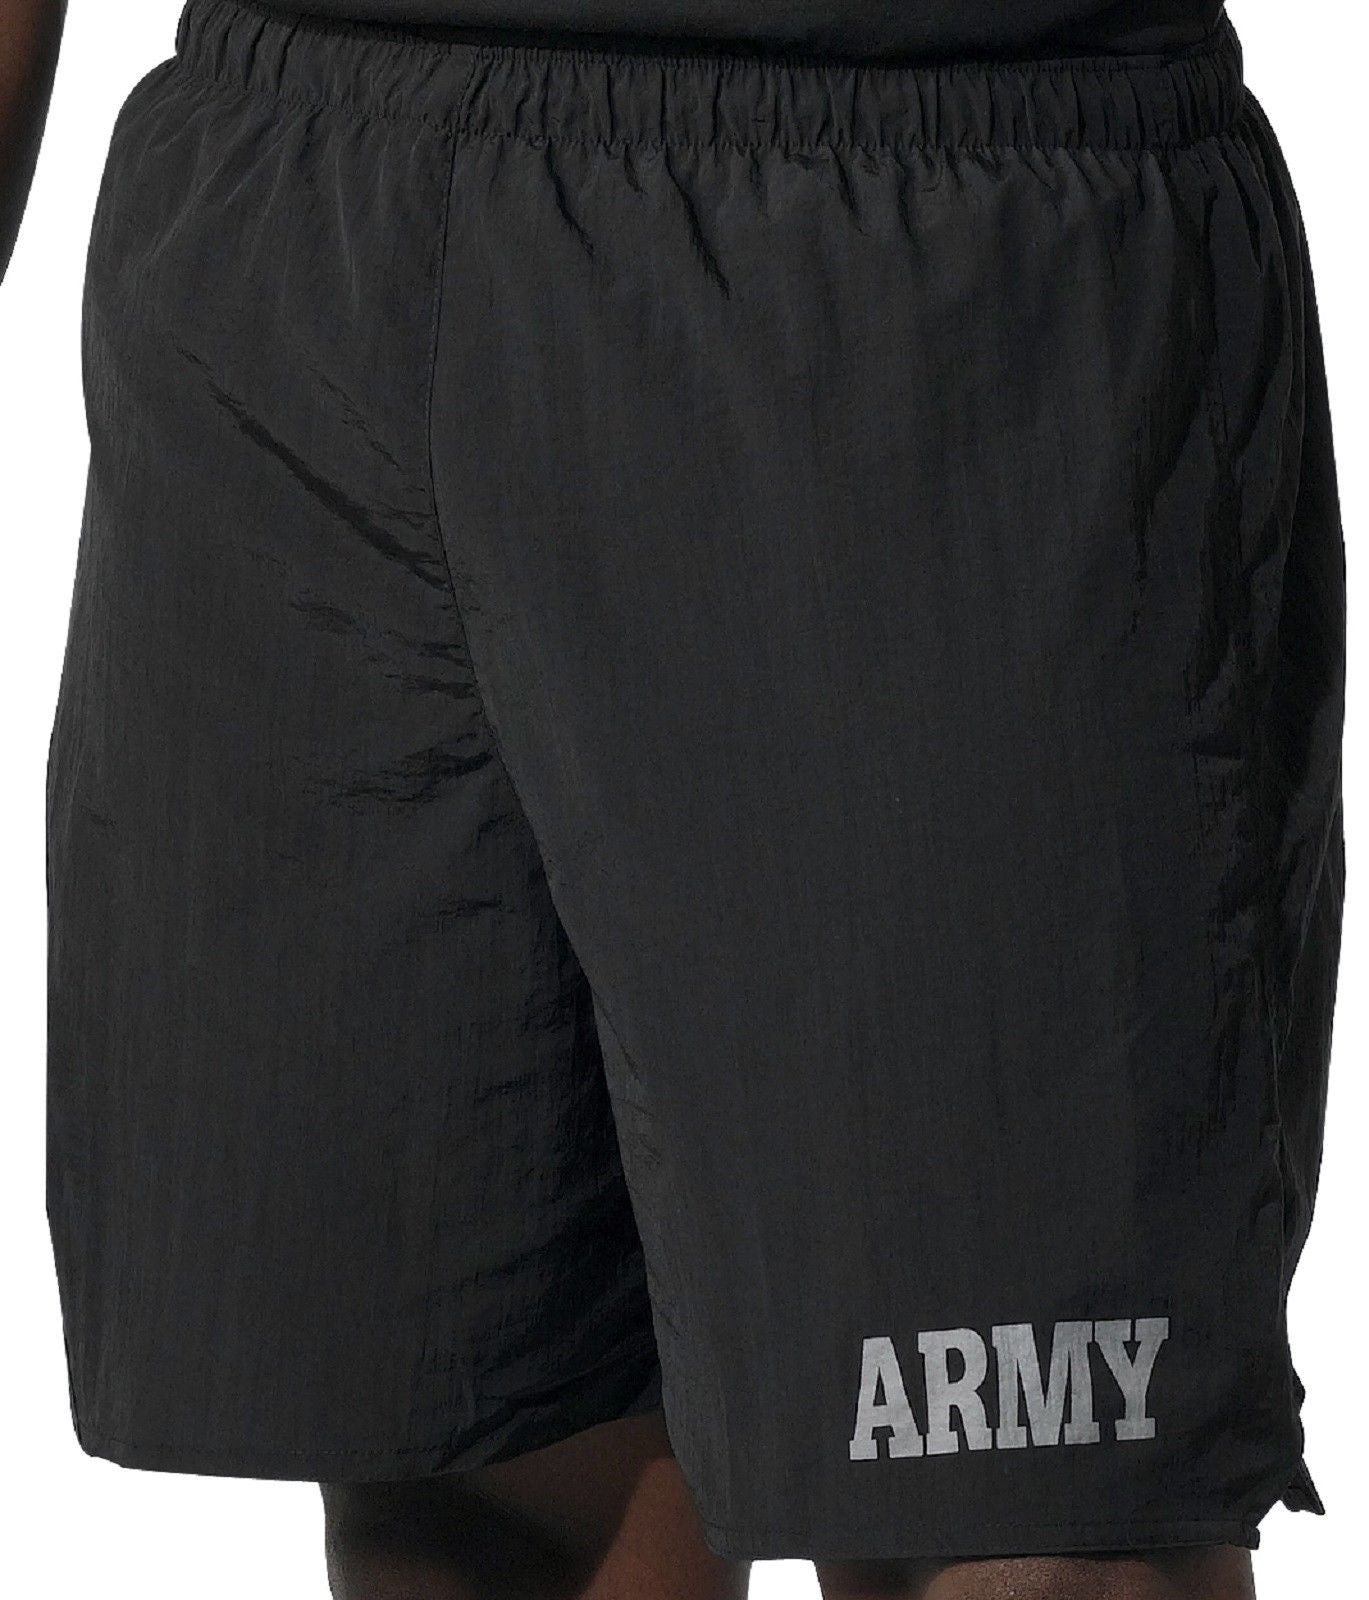 Rothco Black Physical Training "Army" Shorts